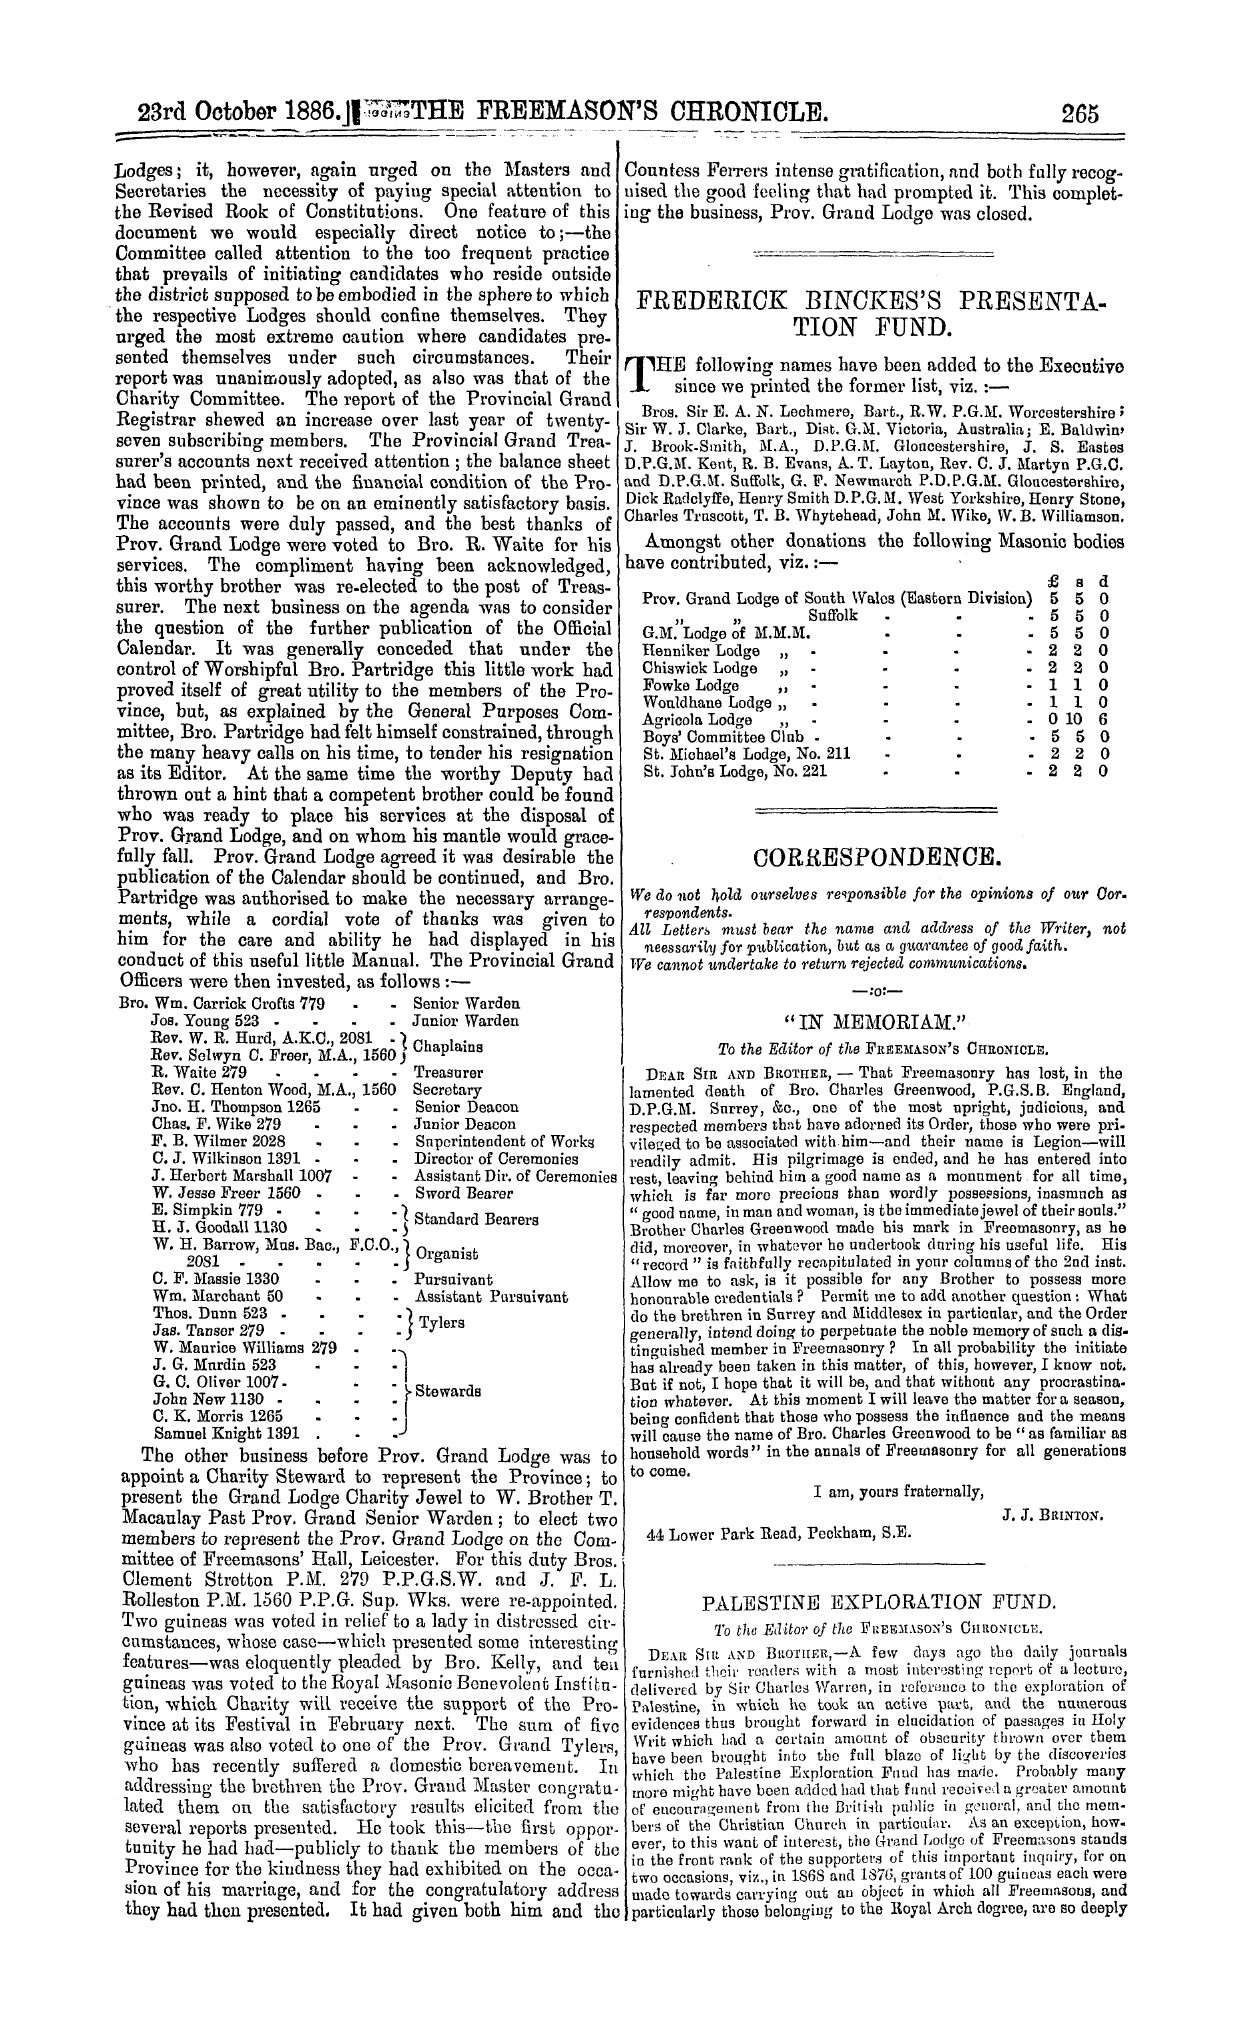 The Freemason's Chronicle: 1886-10-23 - Palestine Exploration Fund.